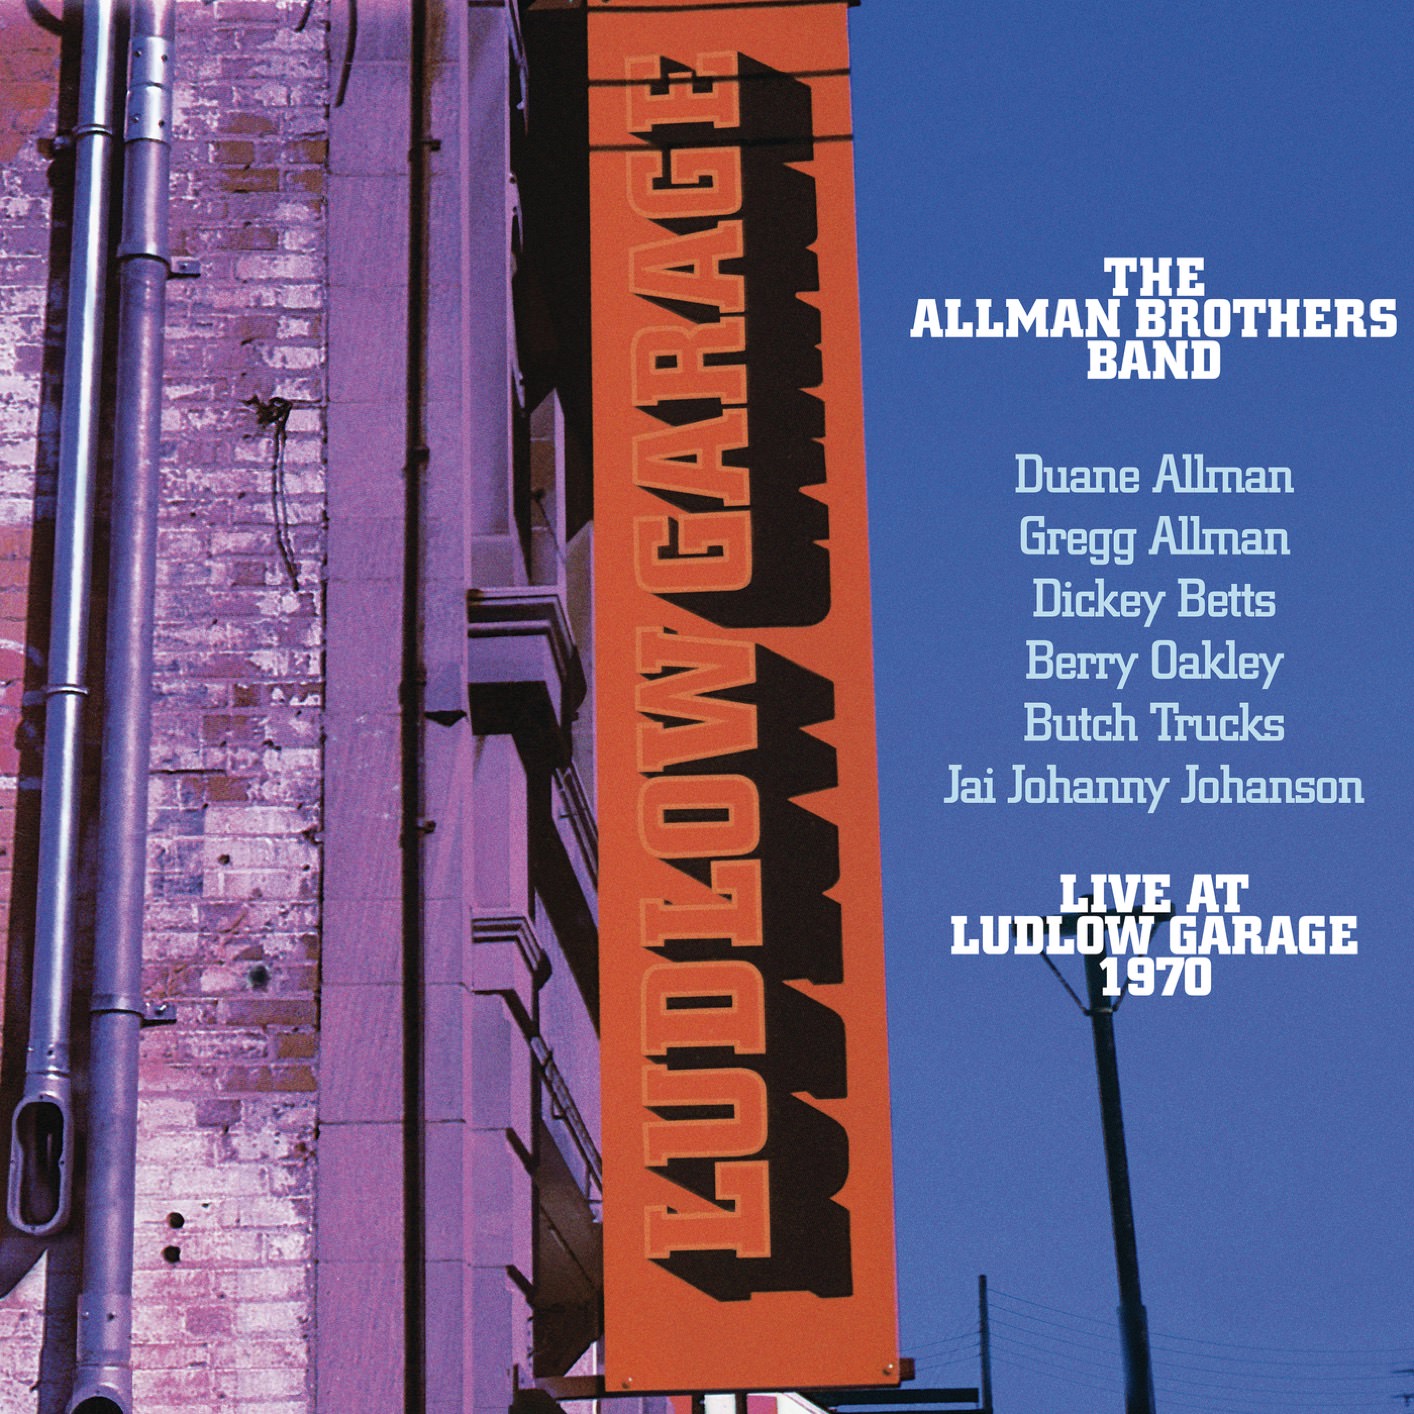 The Allman Brothers Band - Live At Ludlow Garage 1970 (1990/2016) [Qobuz FLAC 24bit/192kHz]